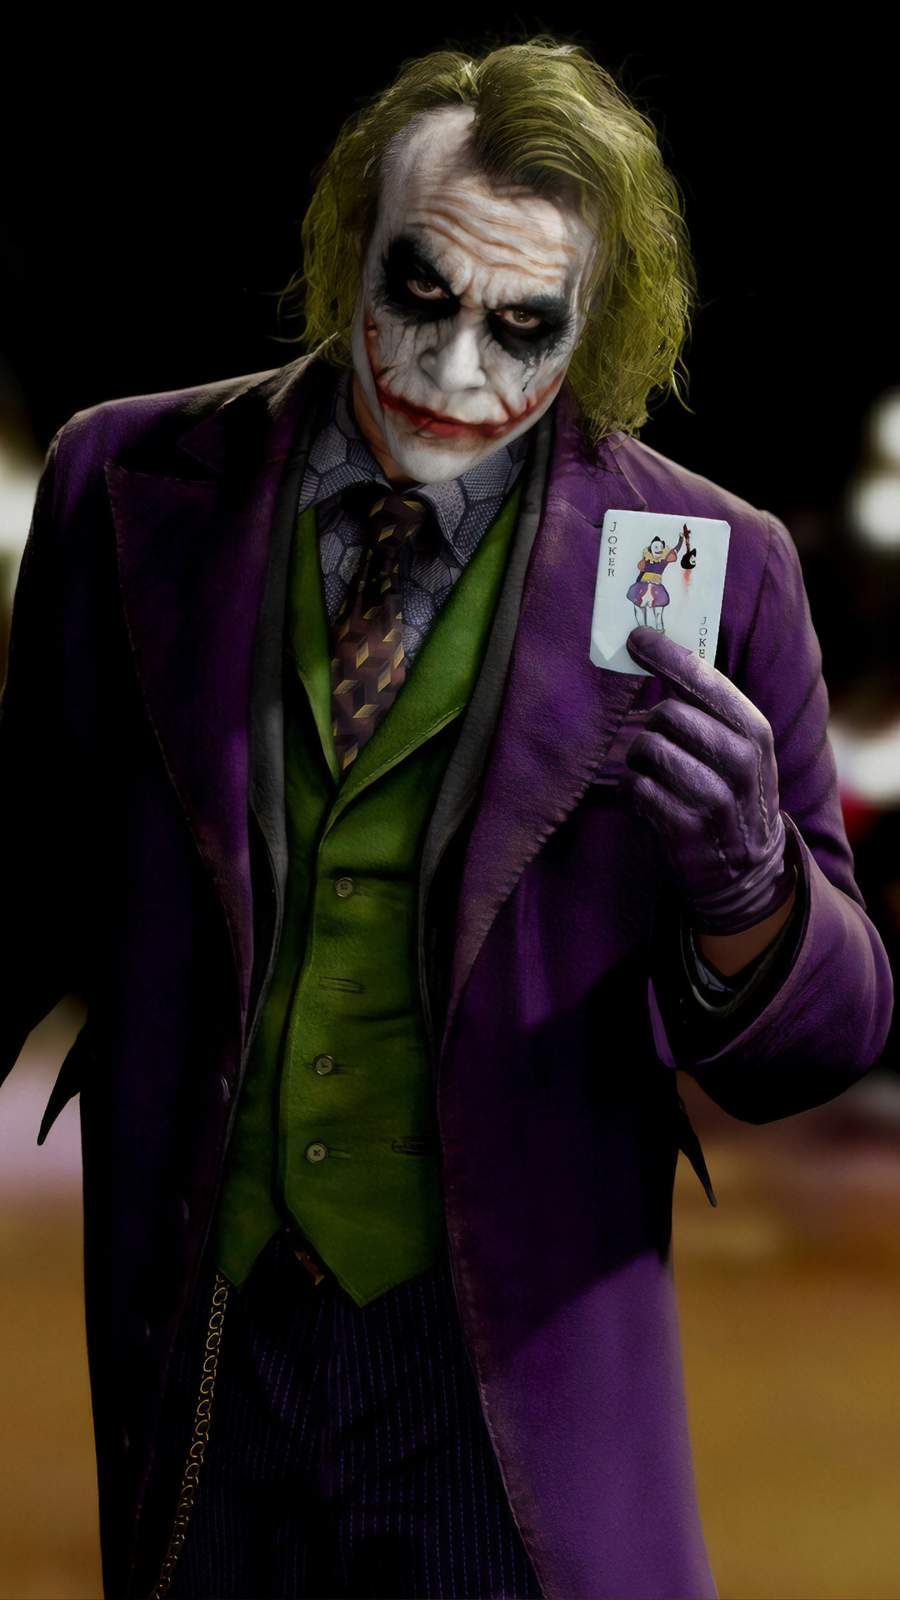 Joker with Card iPhone Wallpaper. Joker wallpaper, Joker heath, Joker image